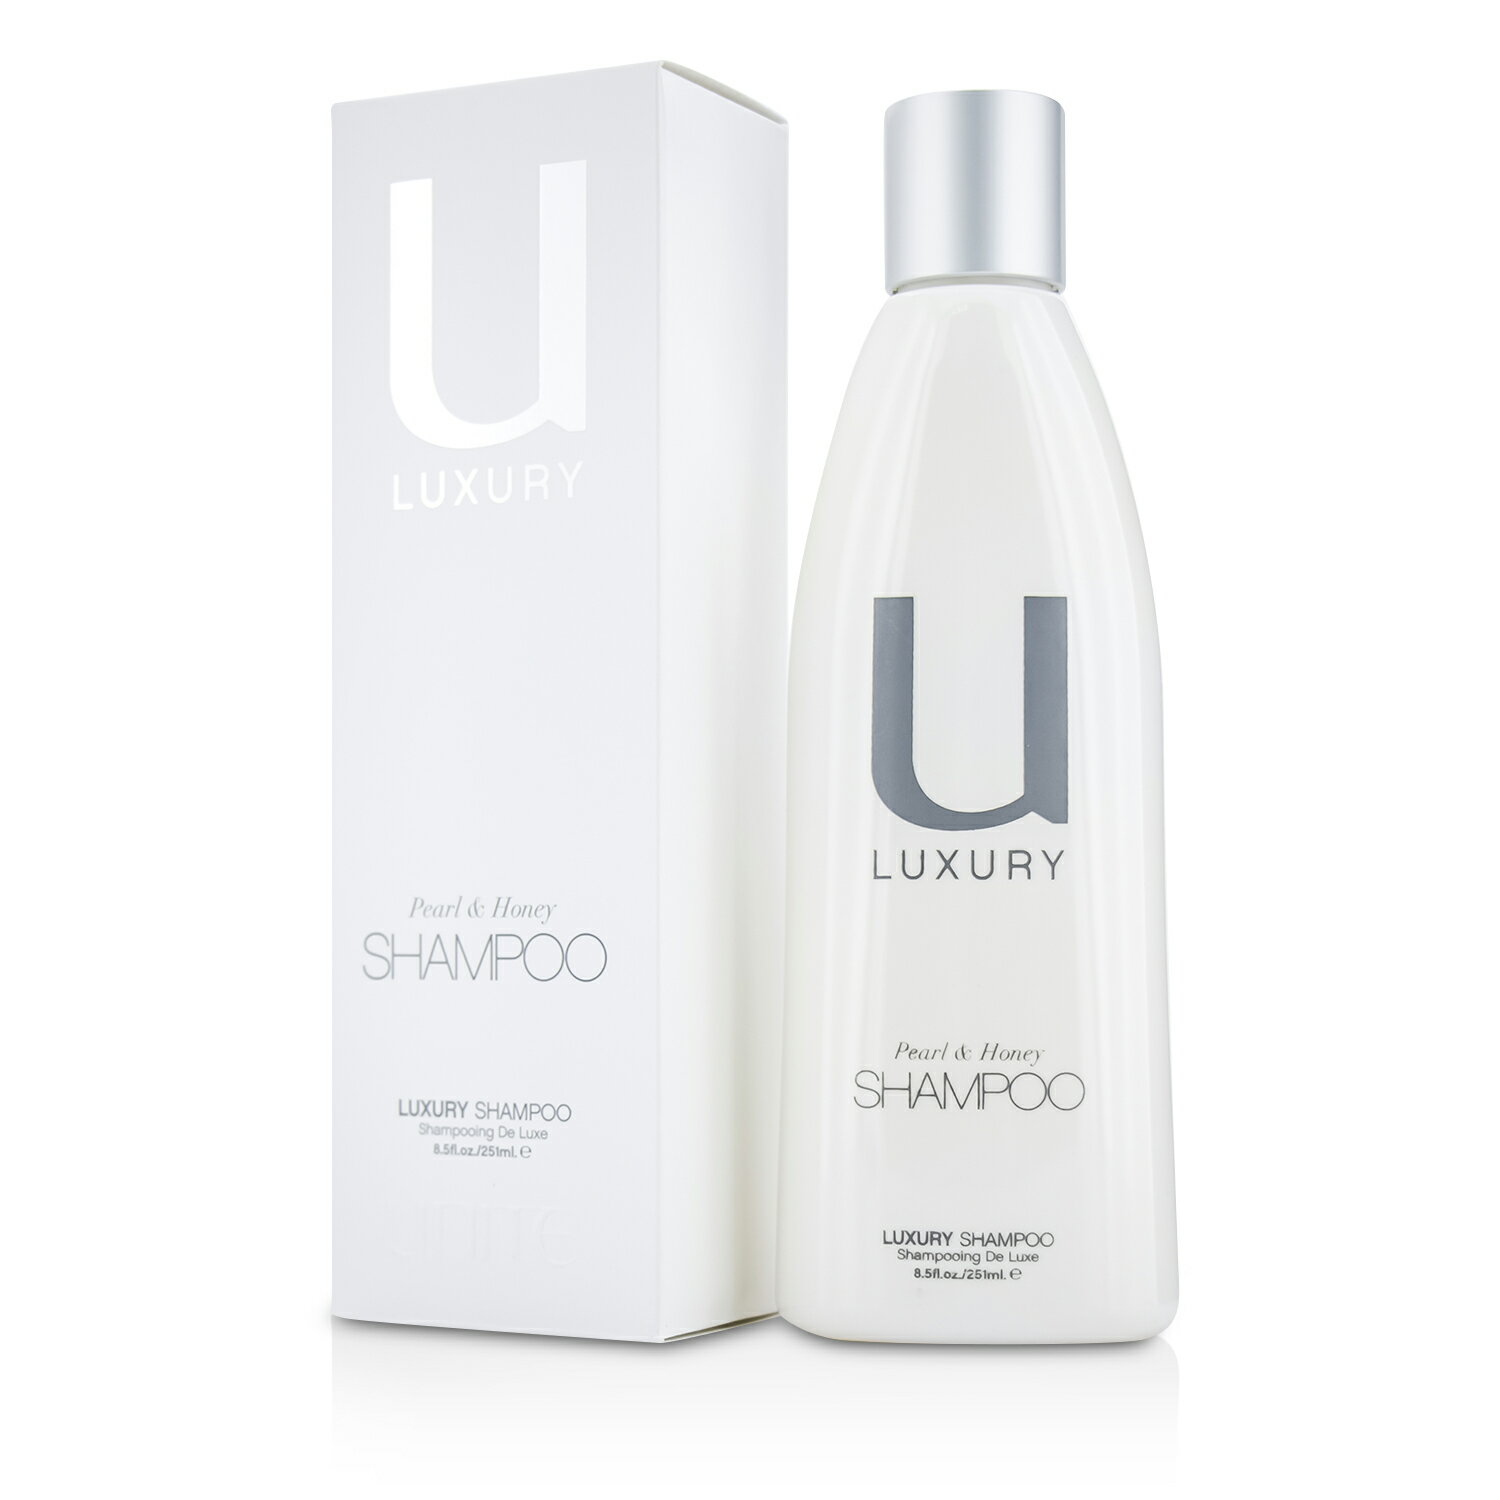 Unite - U 奢華珍珠&蜂蜜洗髮露U Luxury Pearl & Honey Shampoo